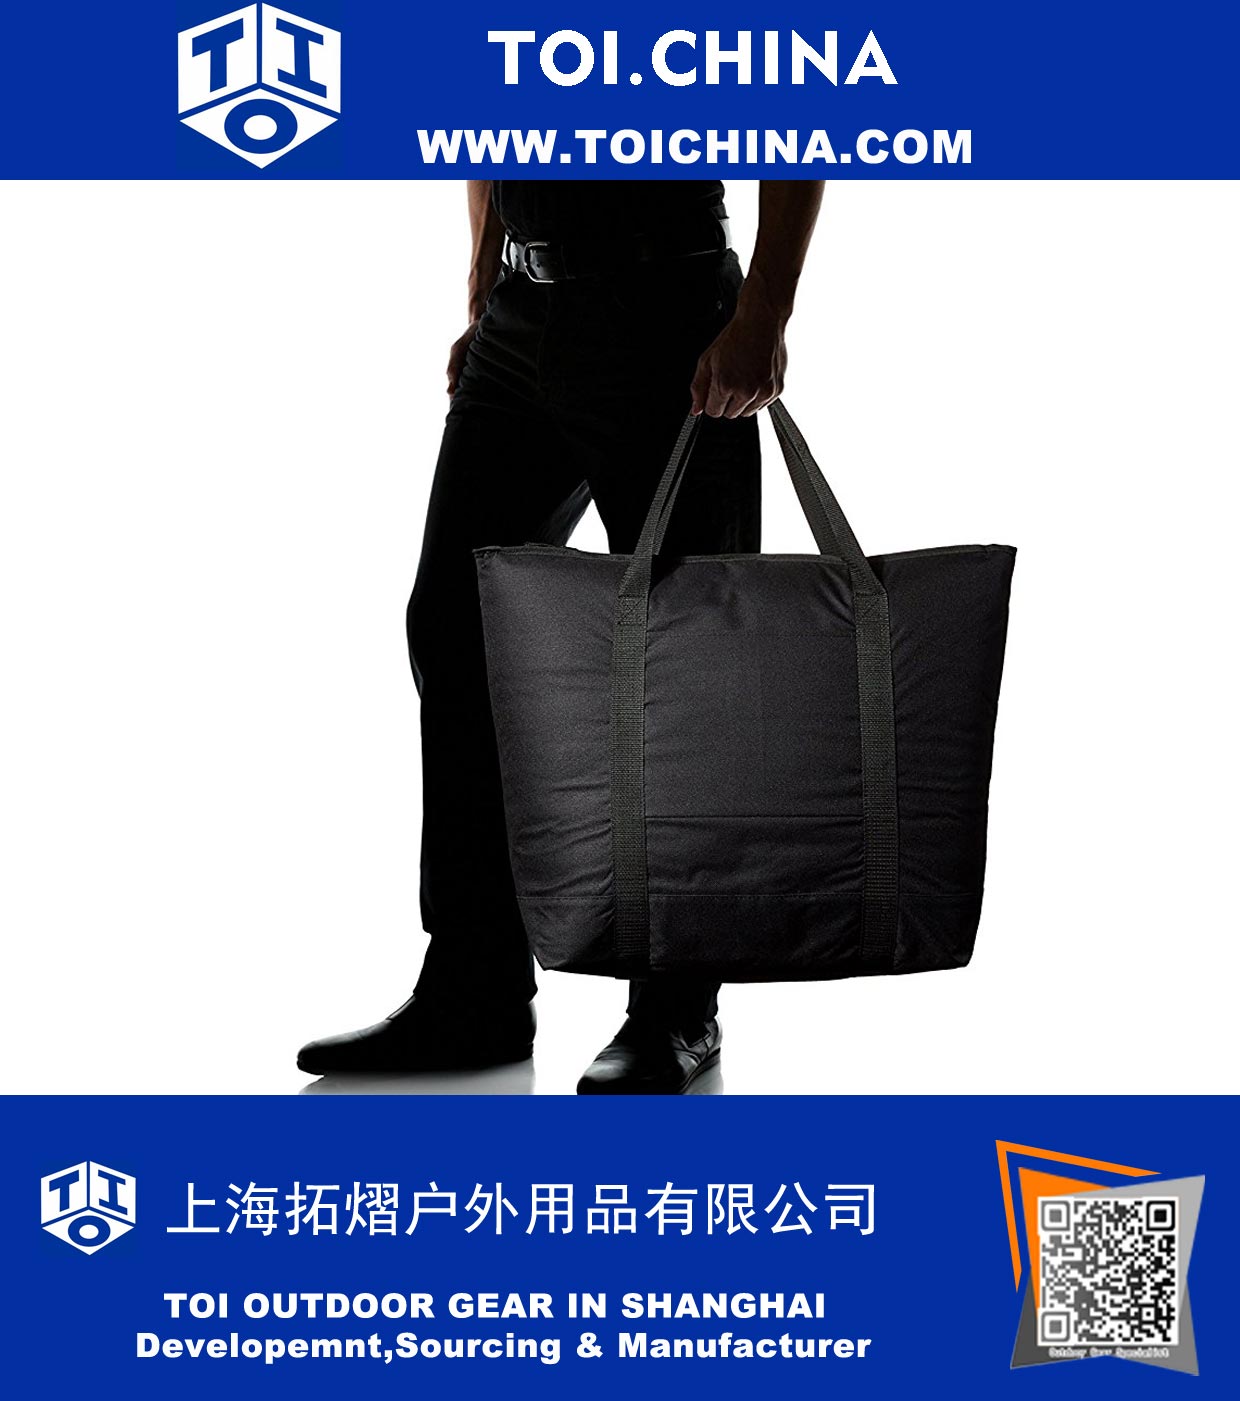 25 Inch Large Cooler Tote Bag